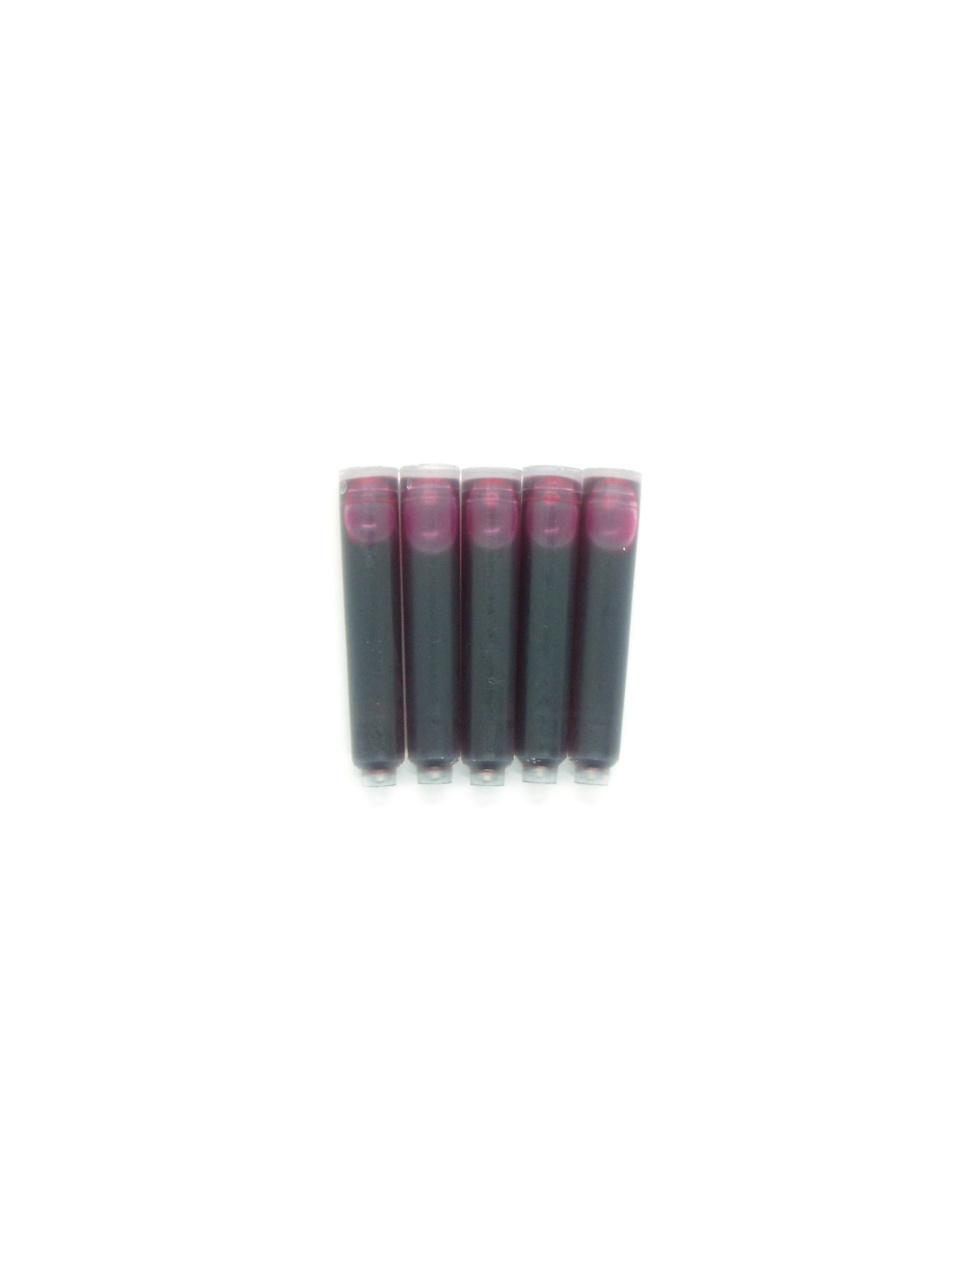 PenConverter Ink Cartridges For Pierre Cardin Fountain Pens (Pink)